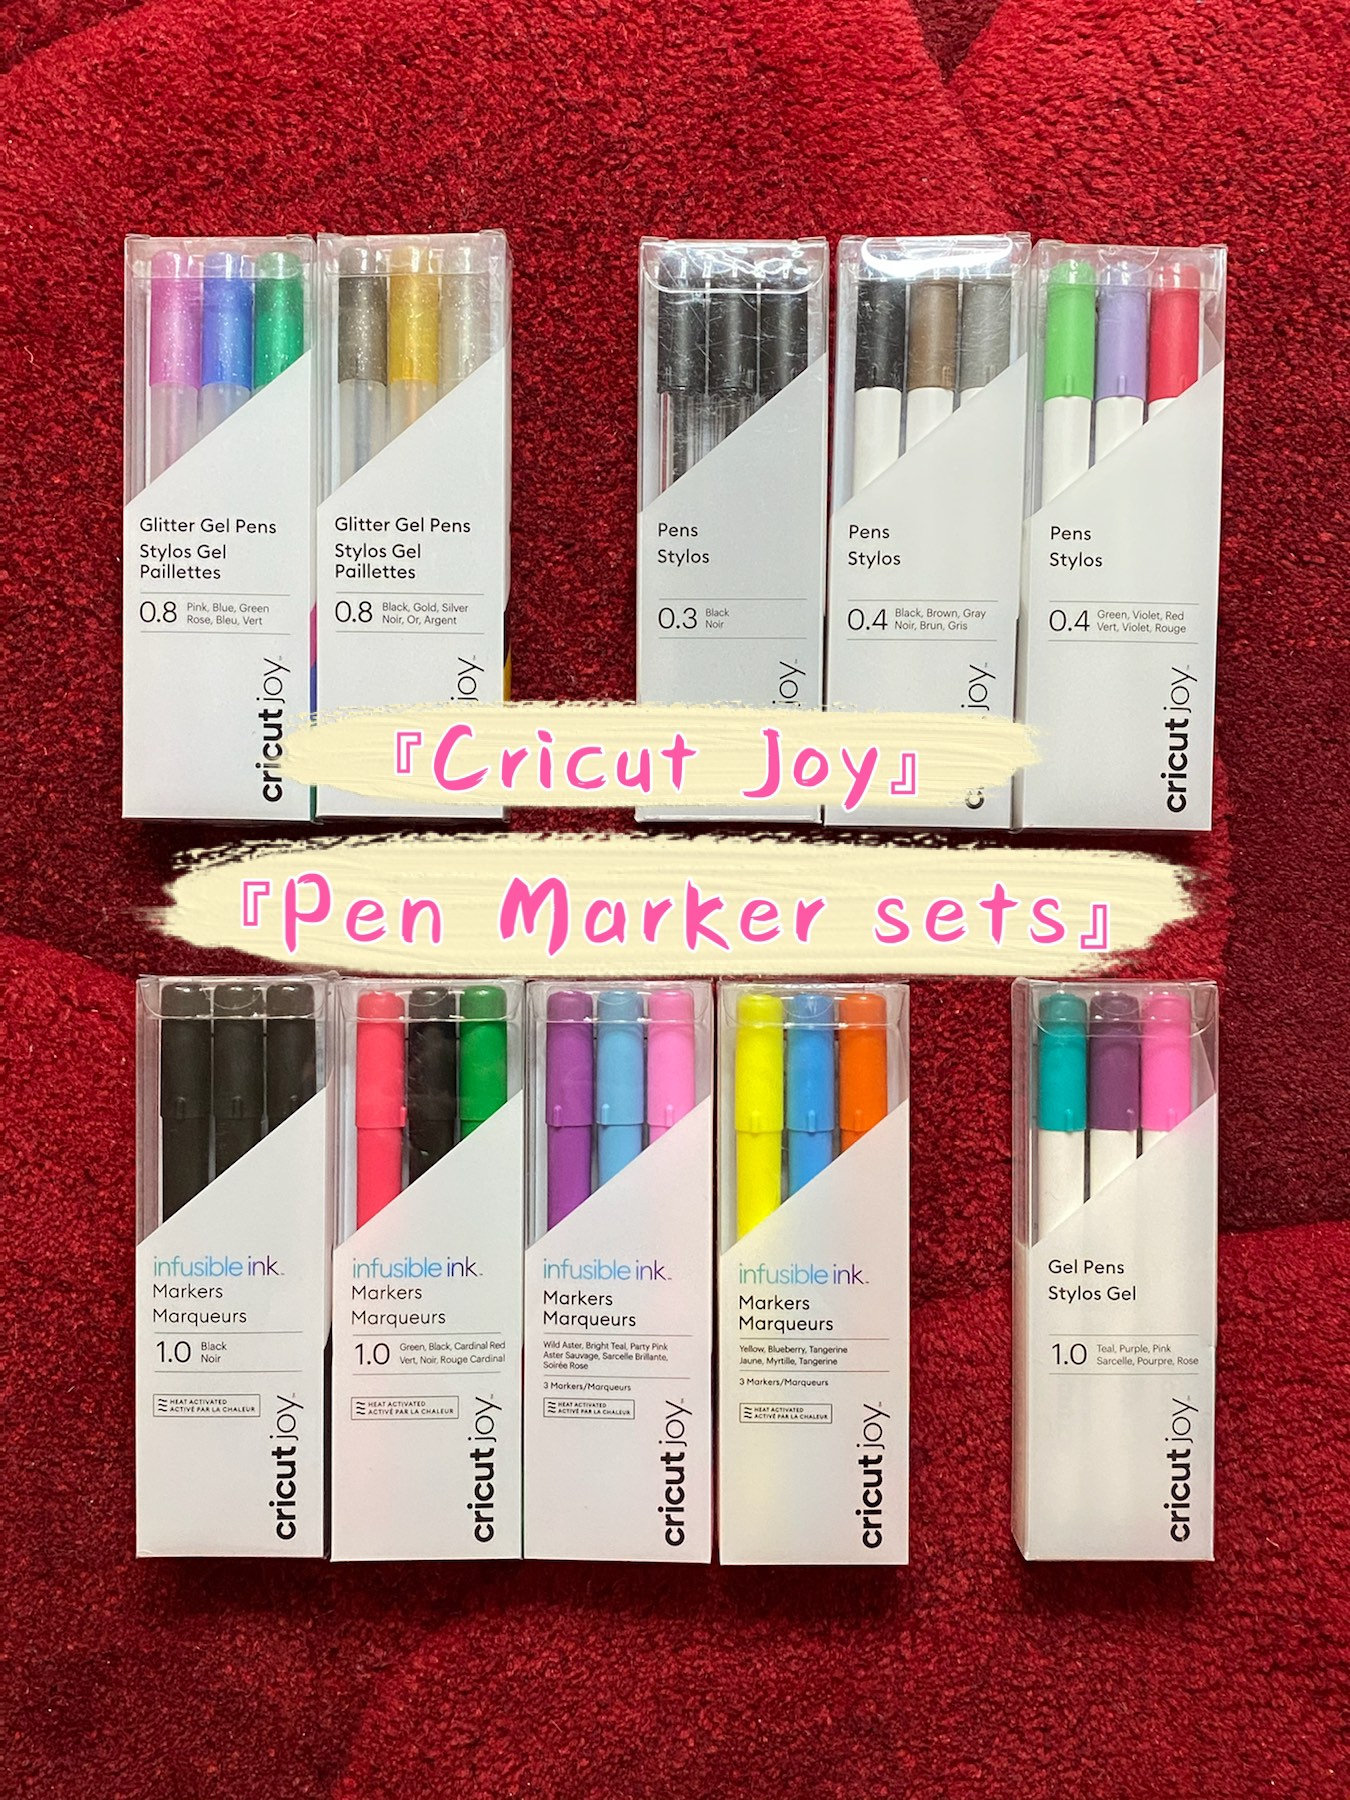 Cricut Infusible Ink Pen Set 30 Pack Explore Air 2 Maker Pens